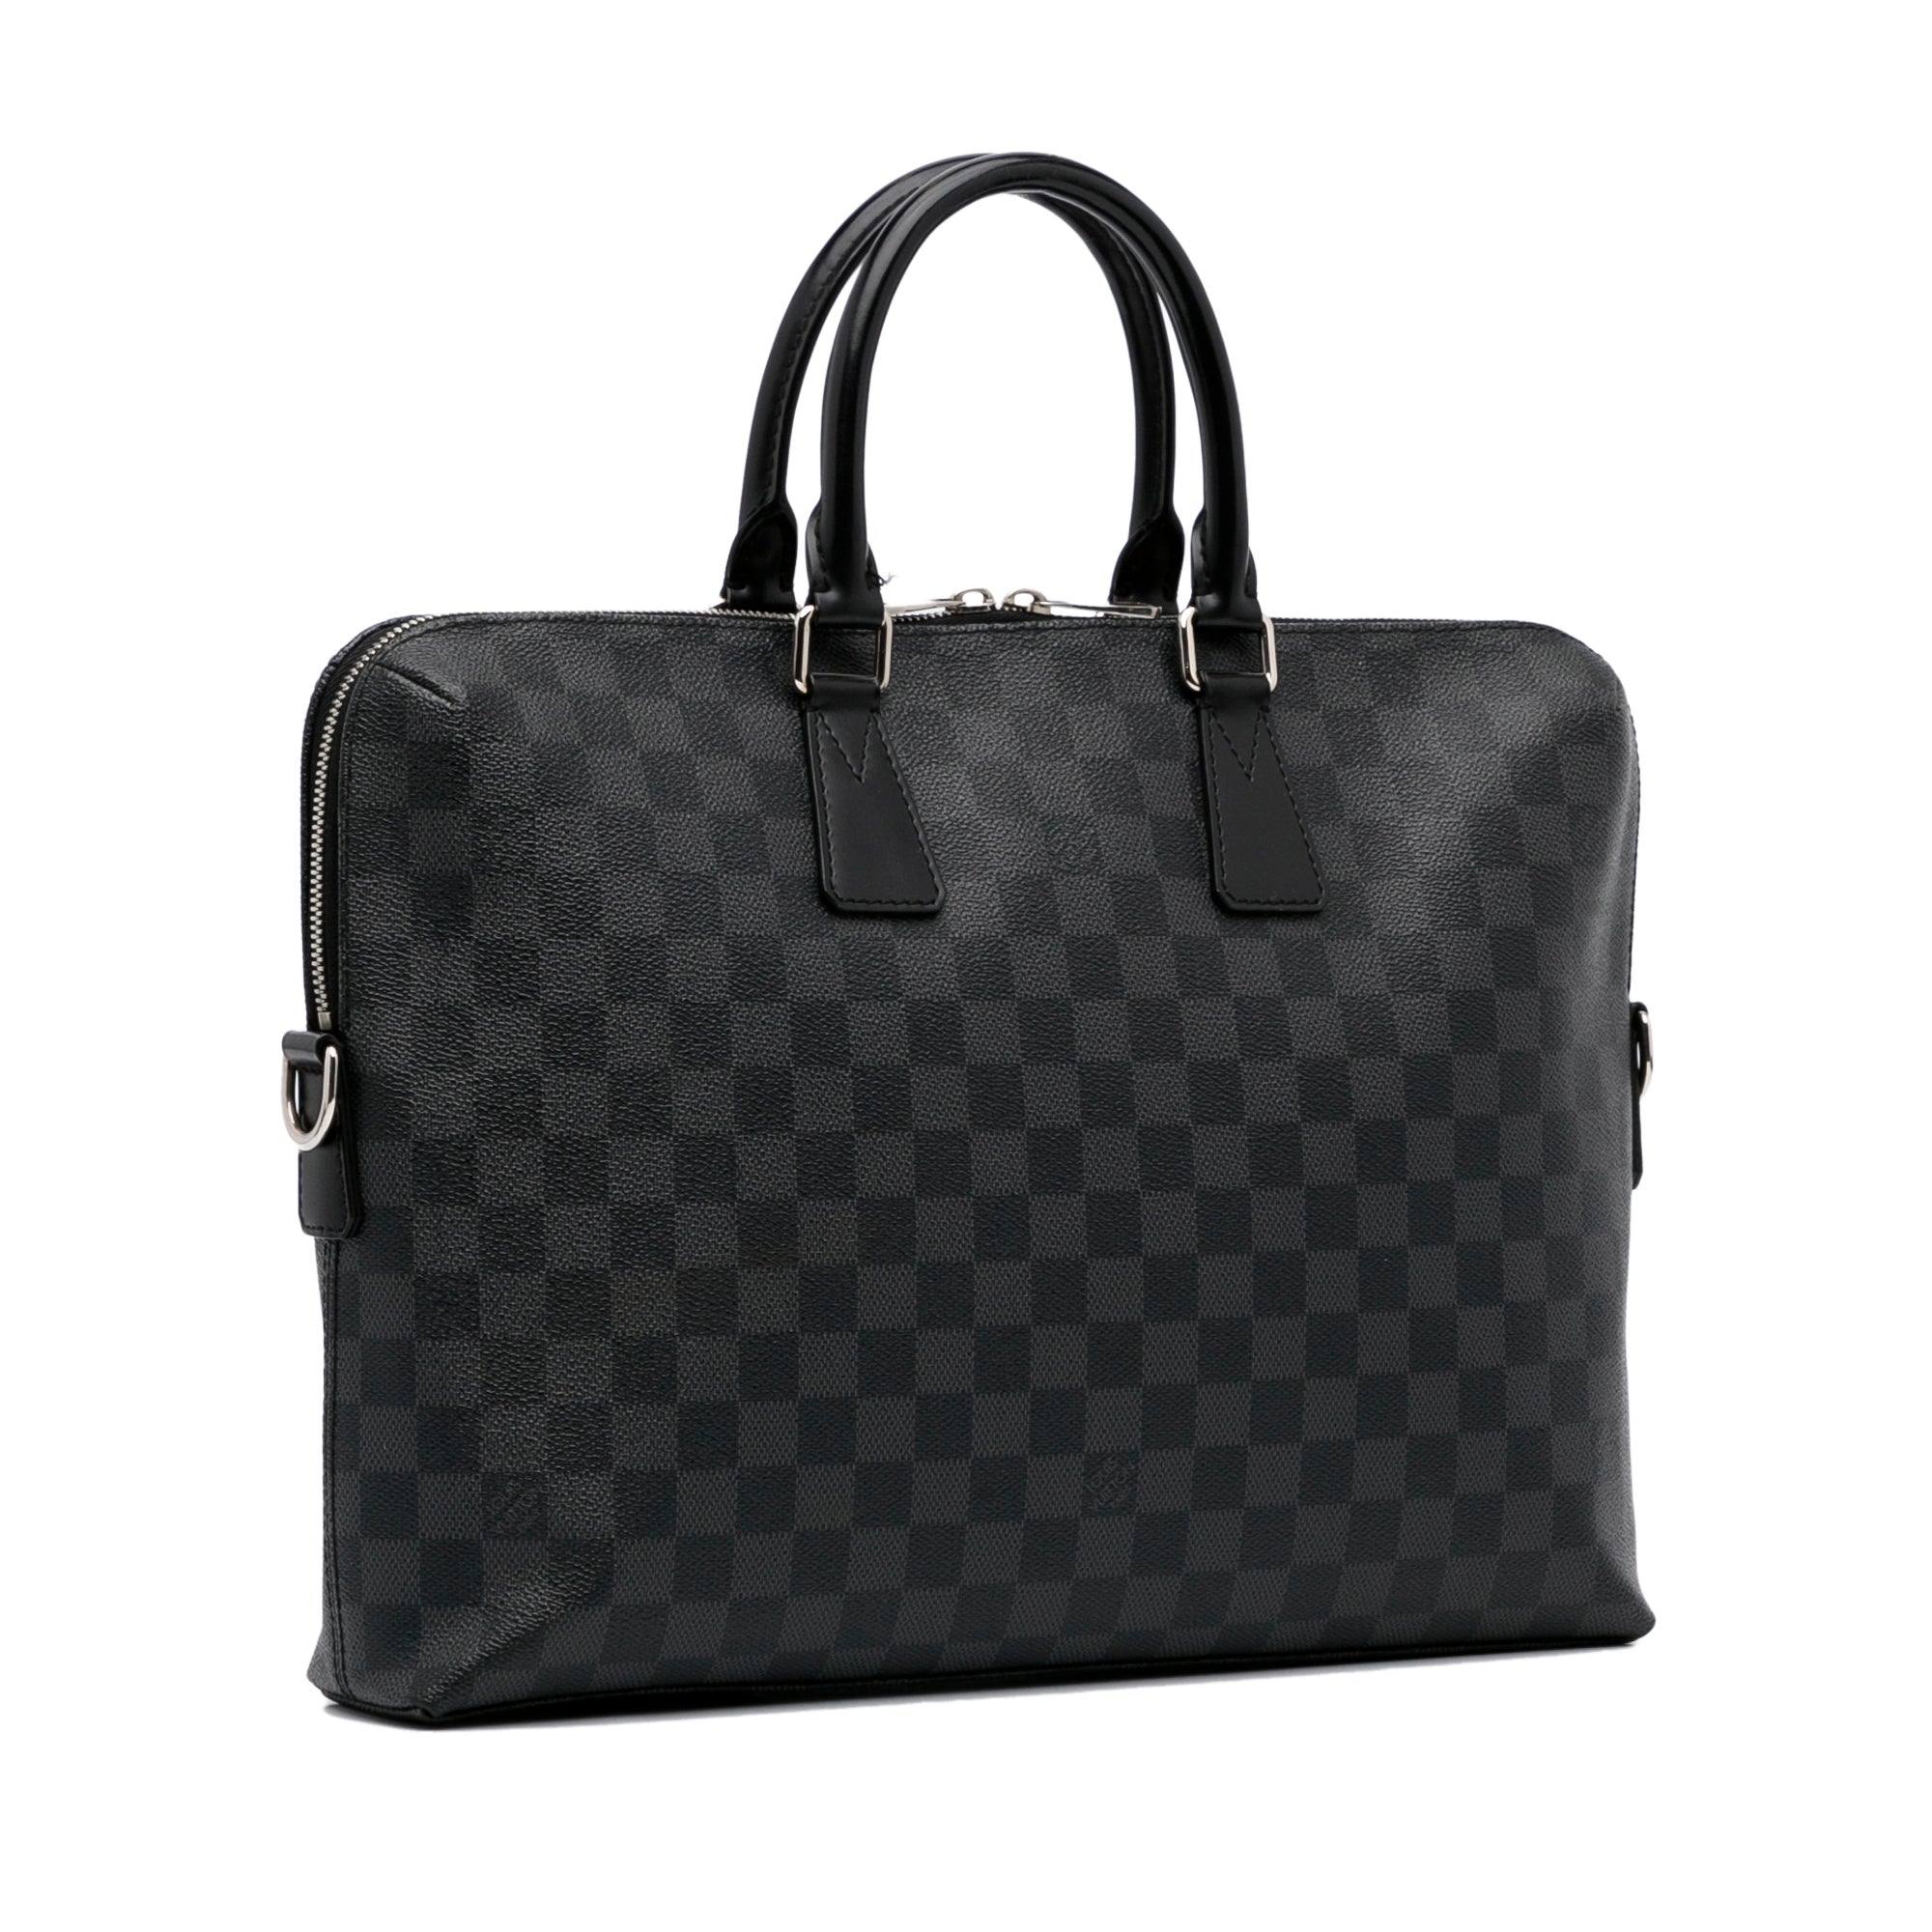 Porte documents voyage cloth bag Louis Vuitton Brown in Cloth